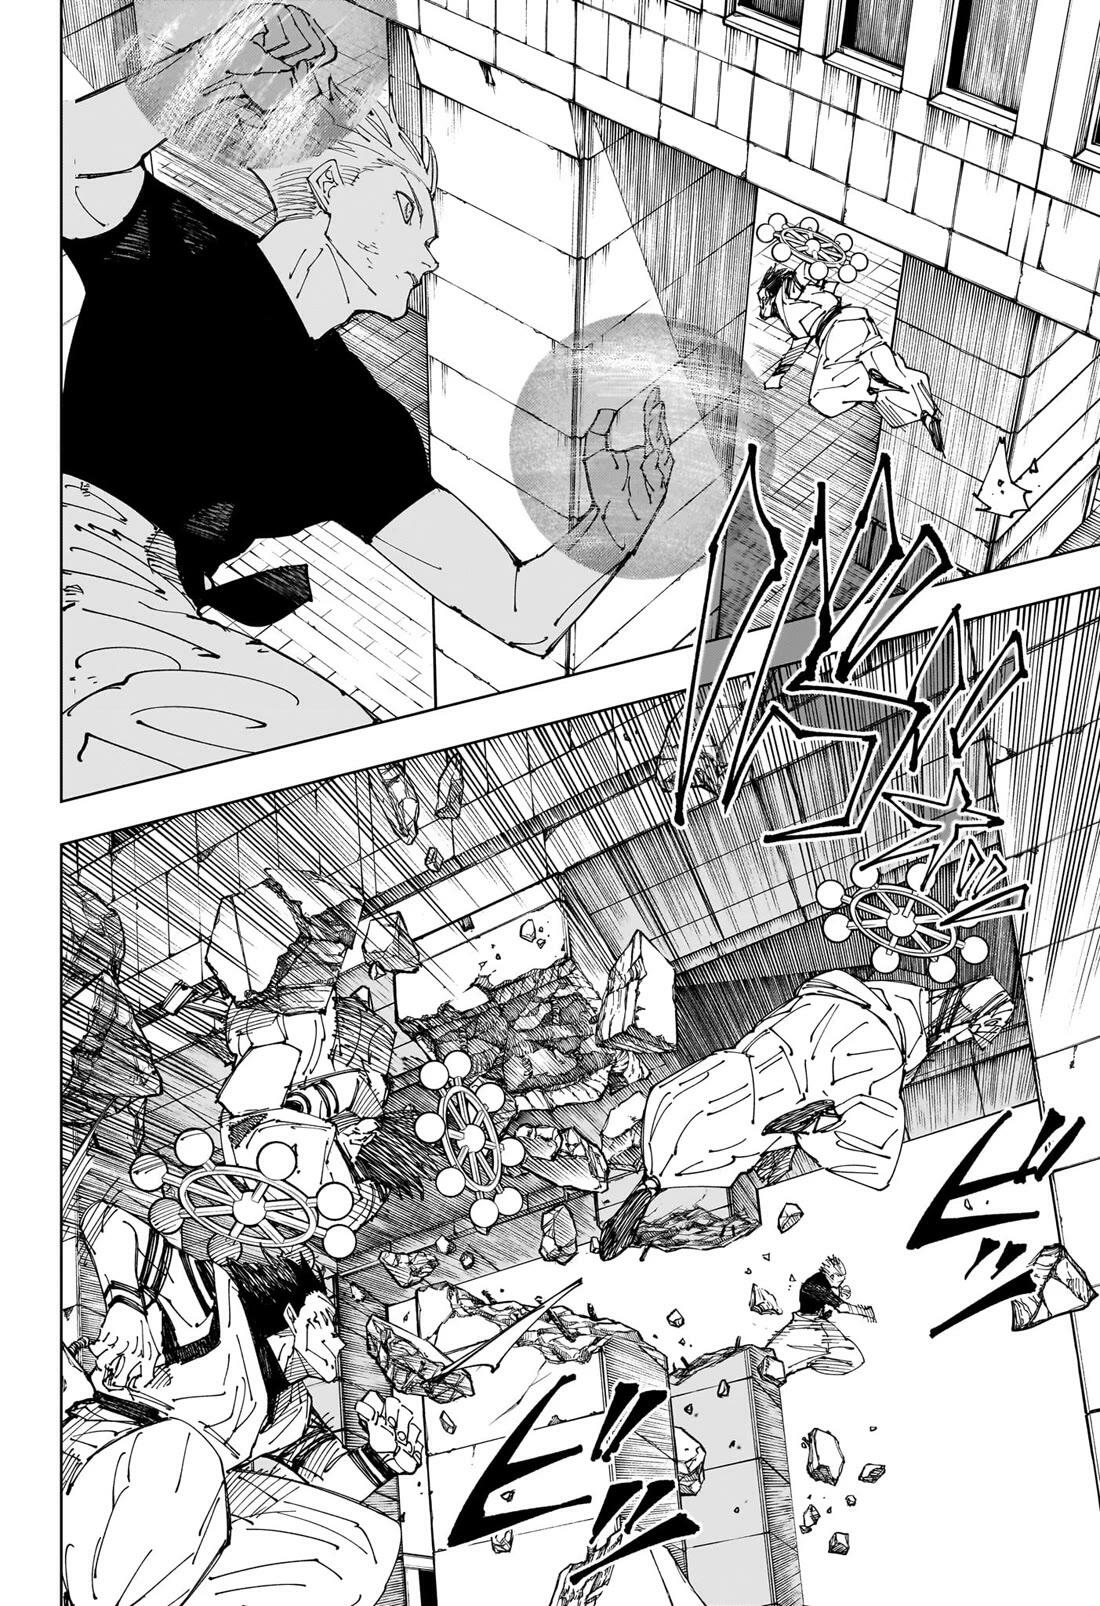 Jujutsu Kaisen Chapter 232: The Decisive Battle In The Uninhabited, Demon-Infested Shinjuku ⑩ page 3 - Mangakakalot